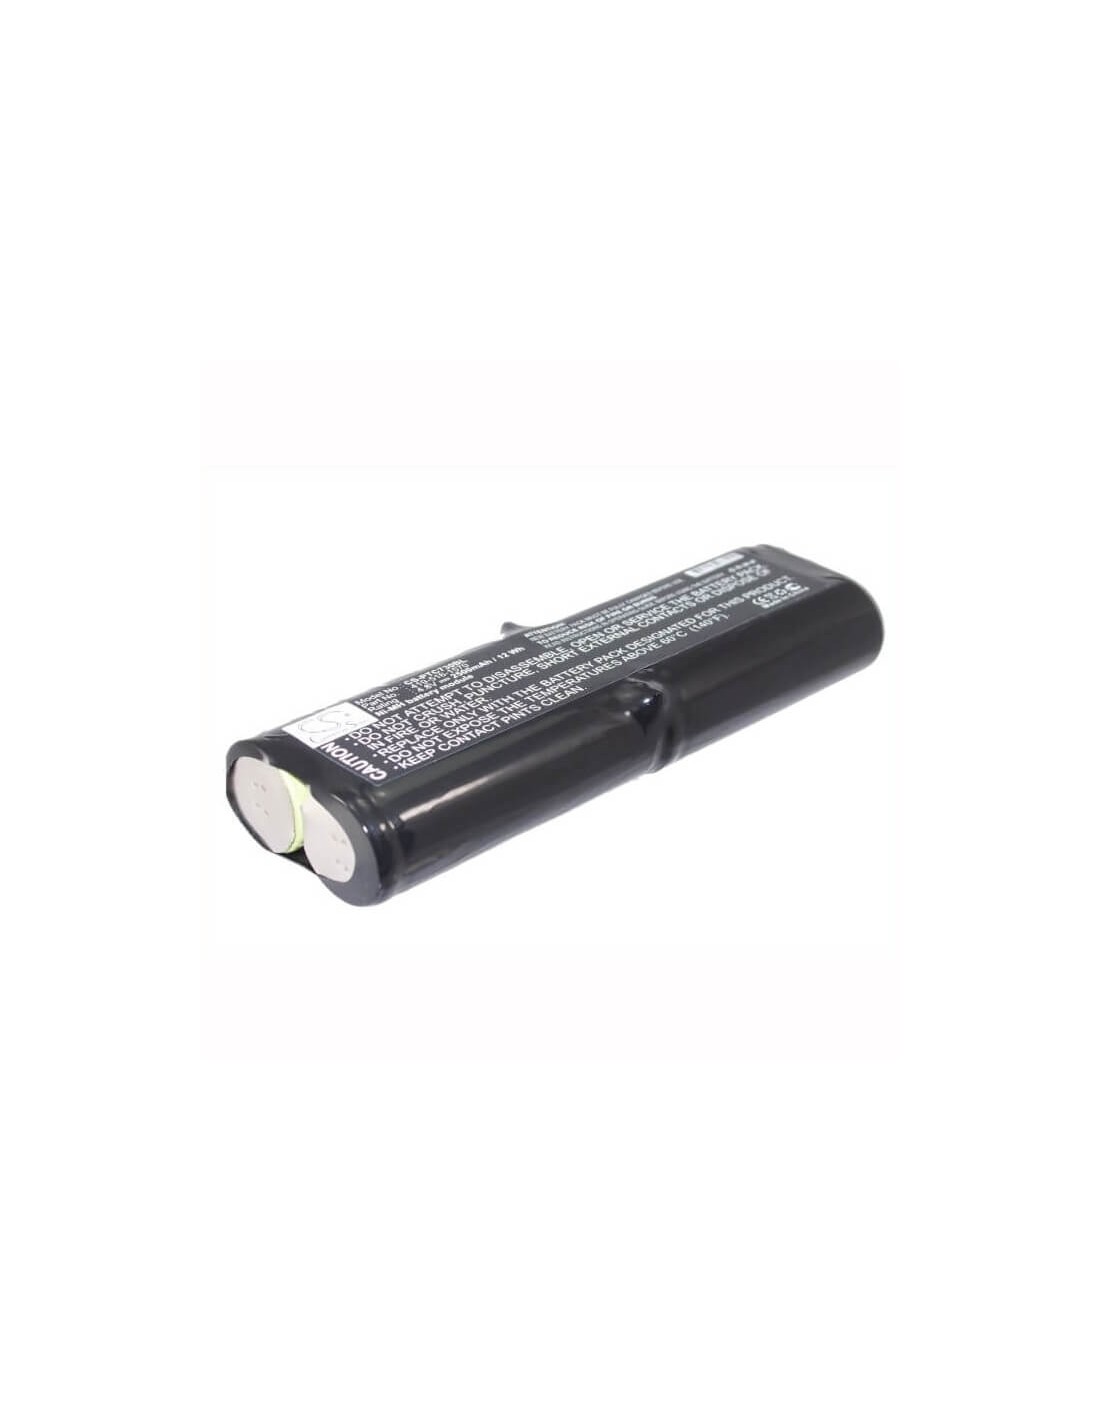 Battery for Symbol, Ptc-730, Ptc-860, Ptc-860ds, Ptc-860ds-11, Ptc-860es 4.8V, 2500mAh - 12.00Wh